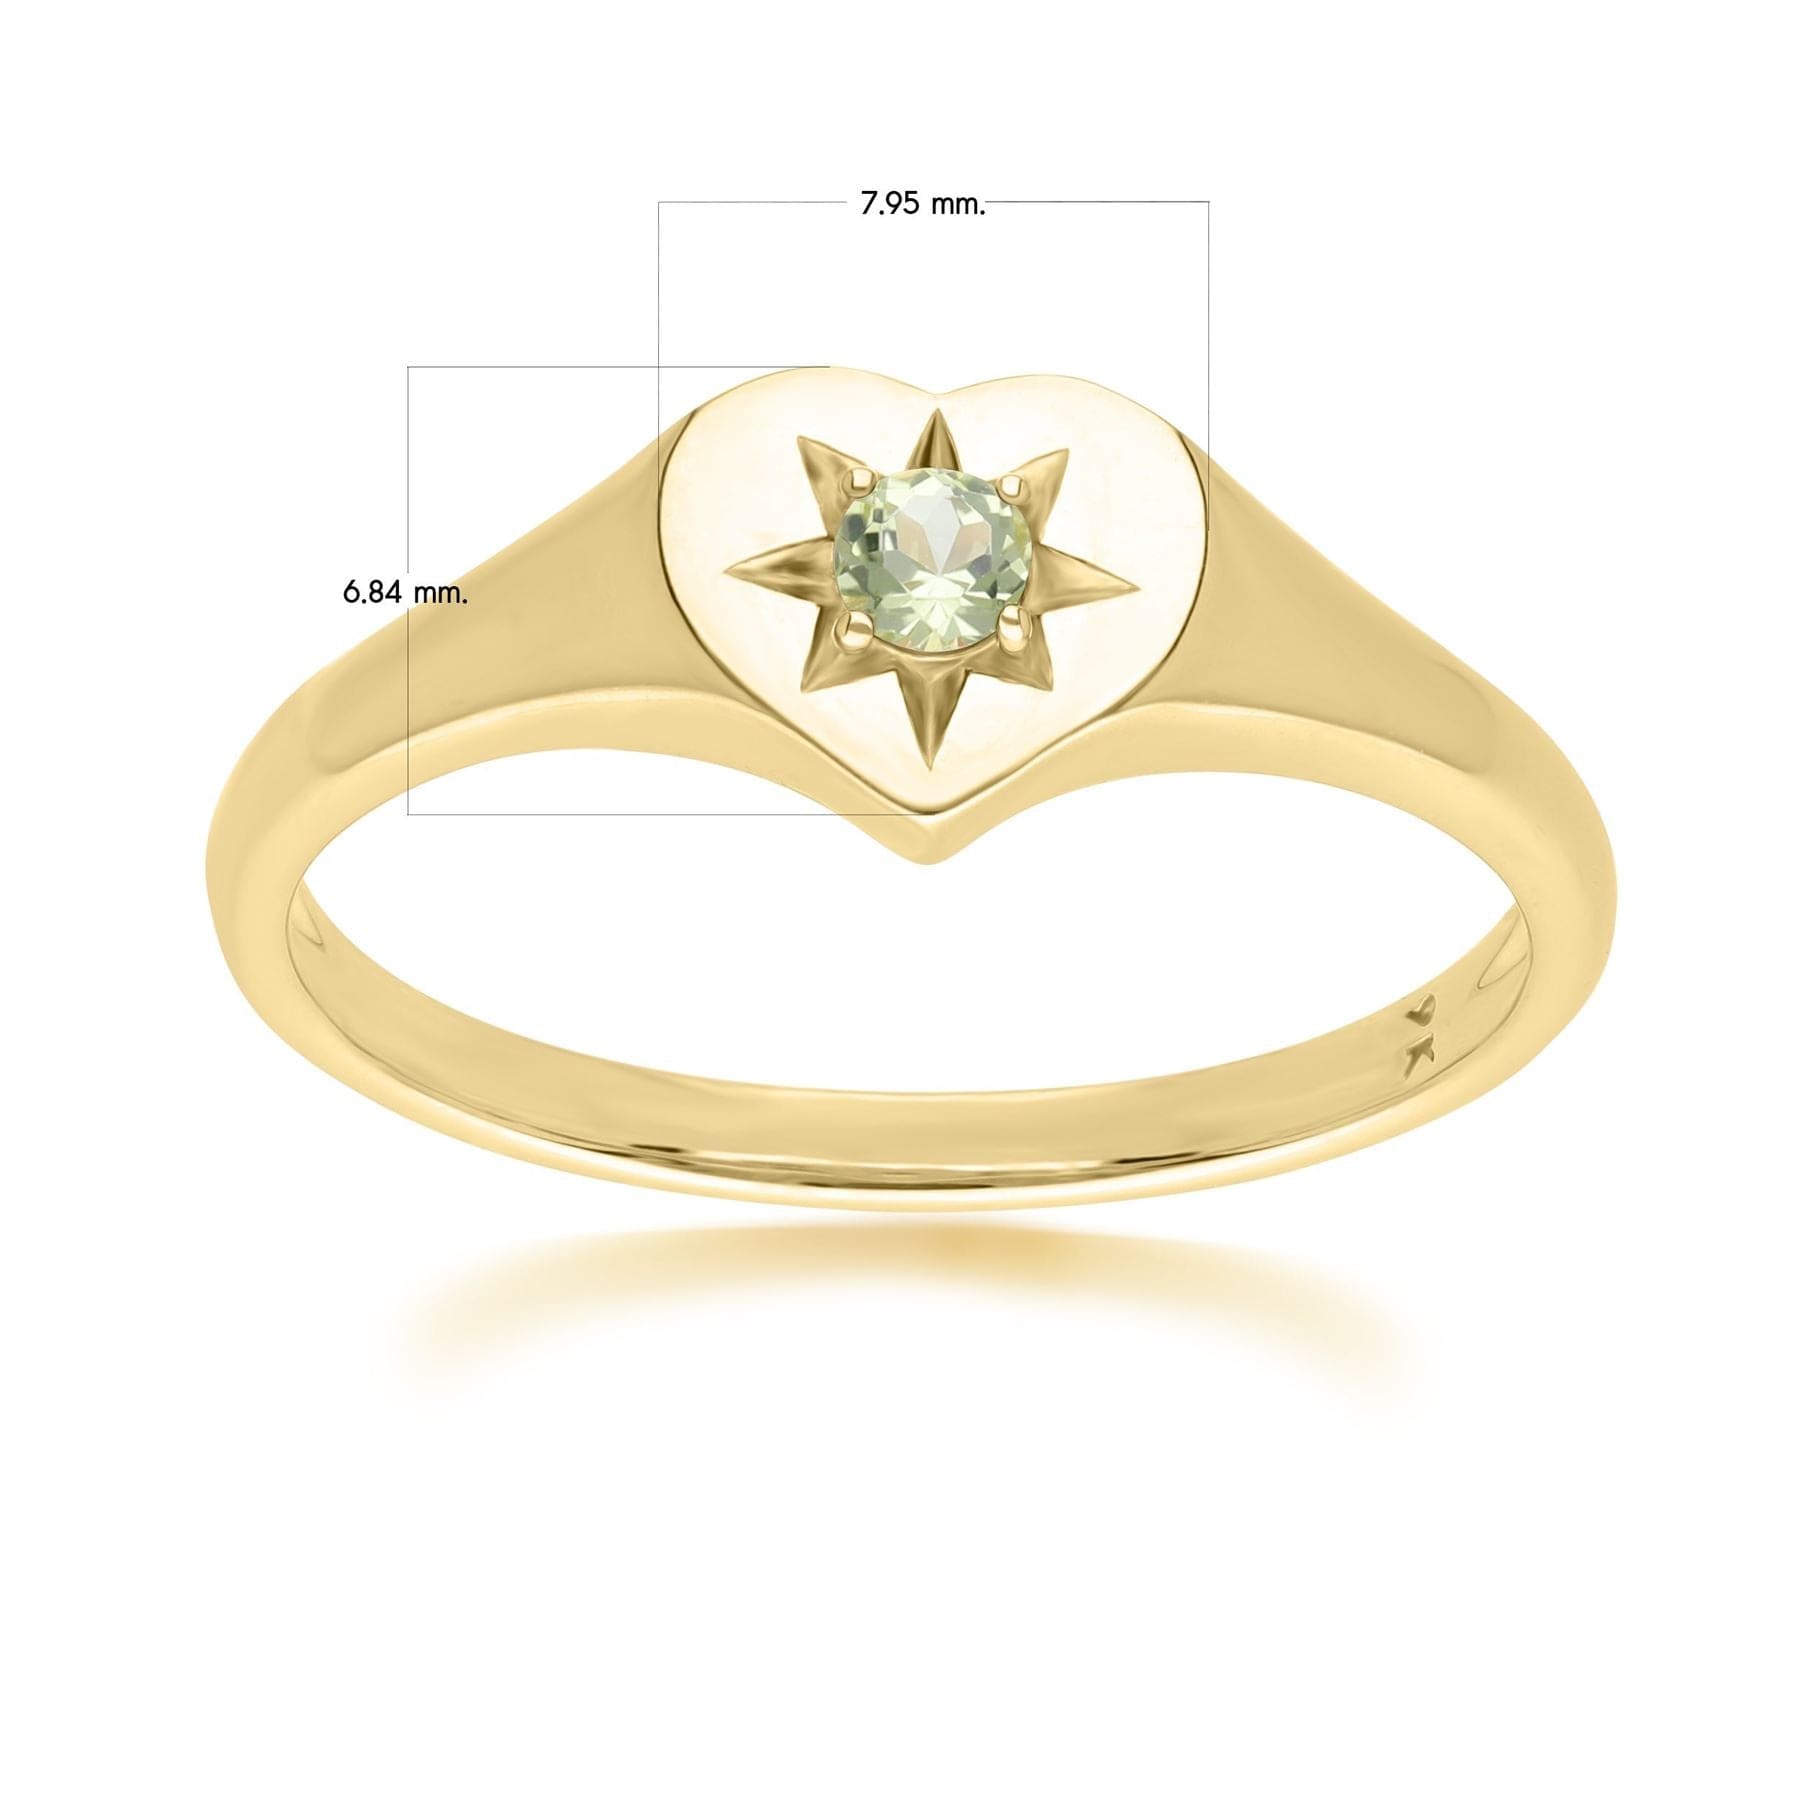 ECFEW™ 'The Liberator' Peridot Heart Ring in 9ct Yellow Gold - Gemondo